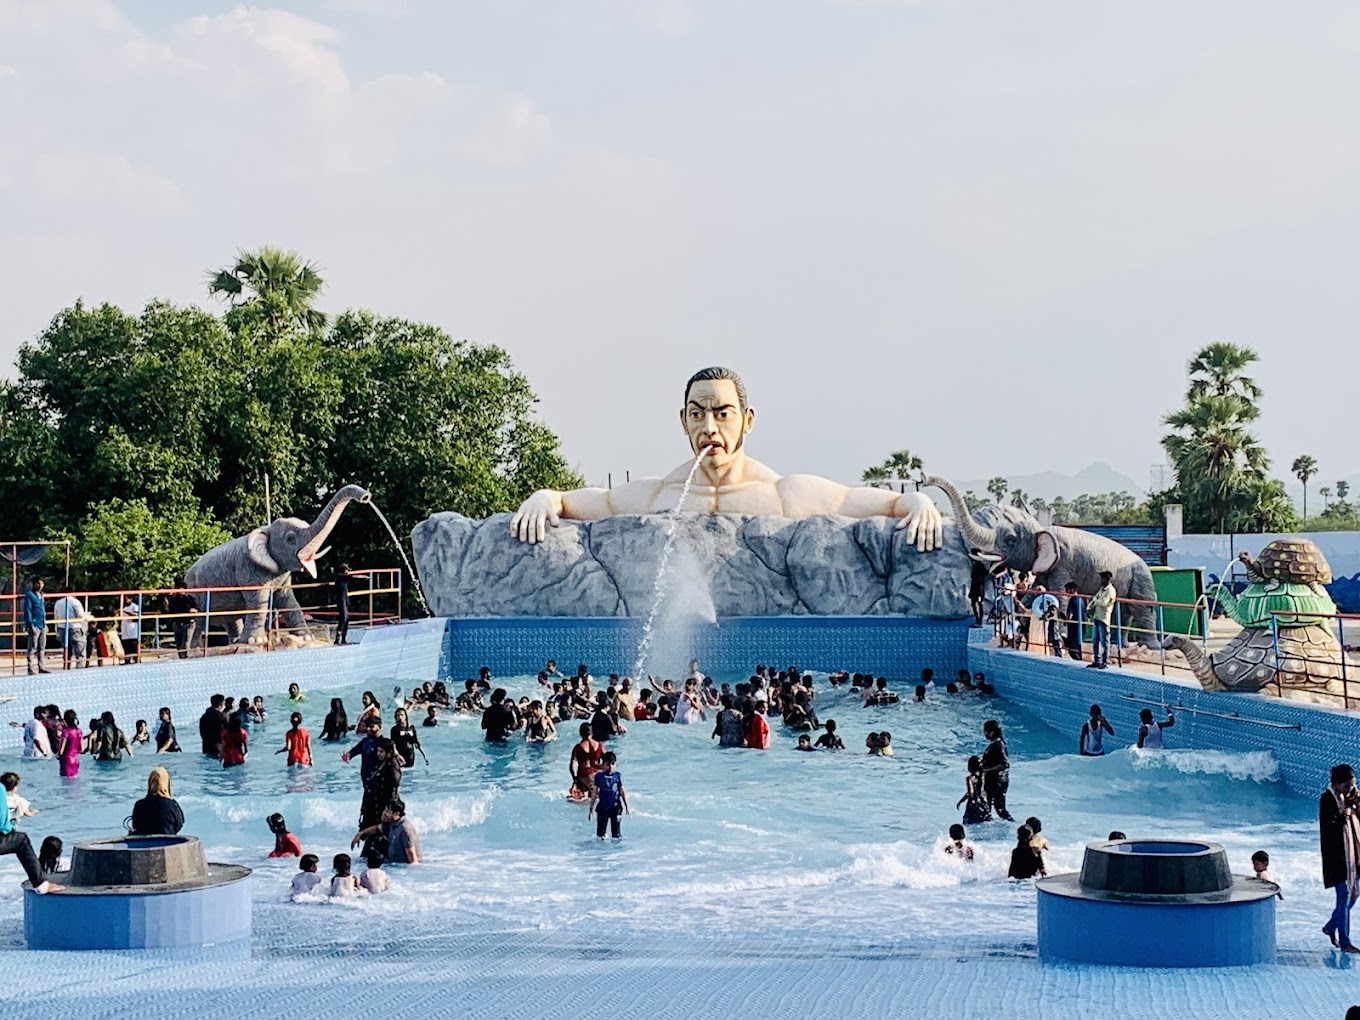 Mount Opera Water Park|Theme Park|Entertainment